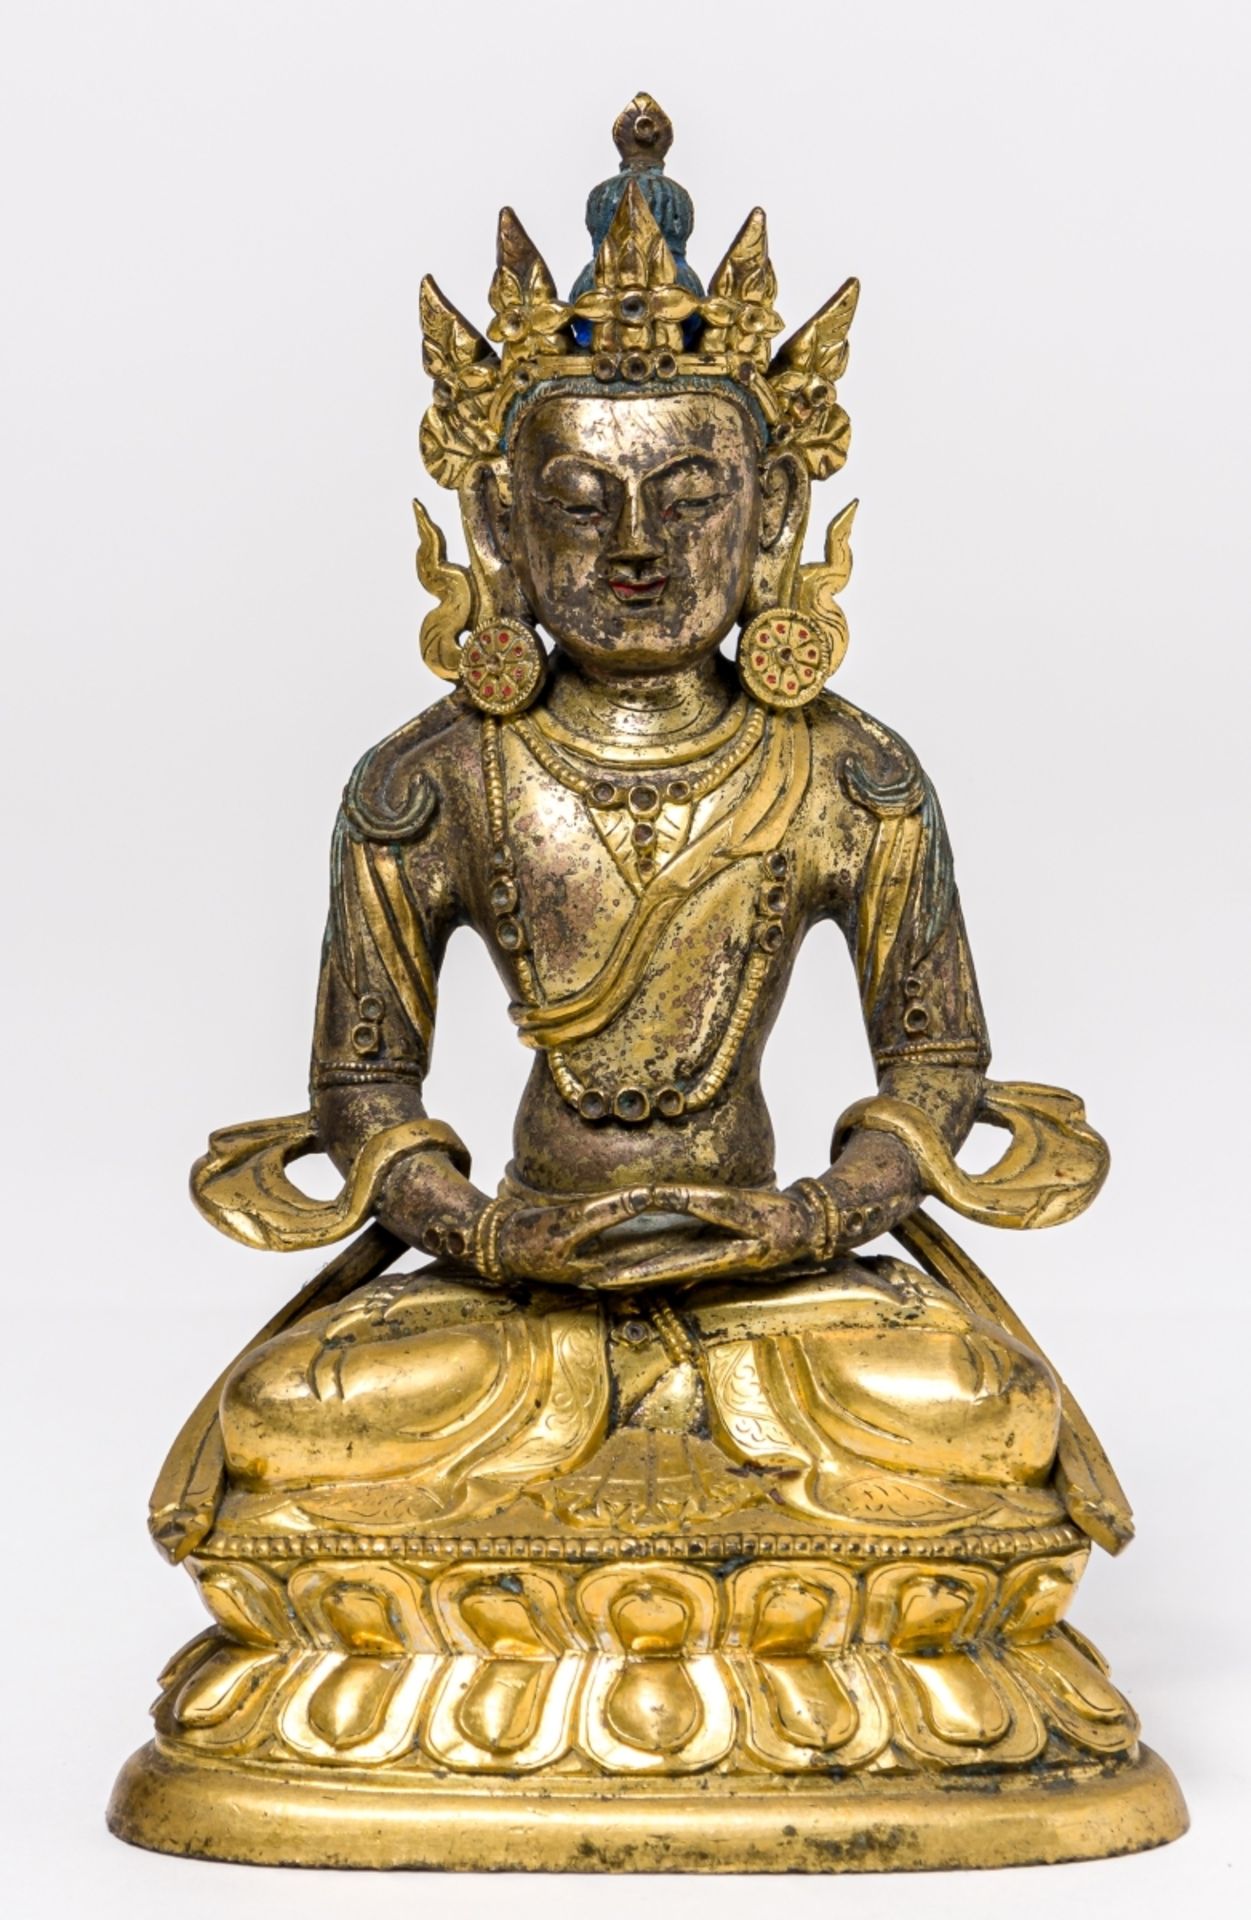 BUDDHA AMITAYUSChina / Tibet, Bronze, vergoldet, 19. Jh. oder älter11 x 7 x 17 cm, Gewicht: 650